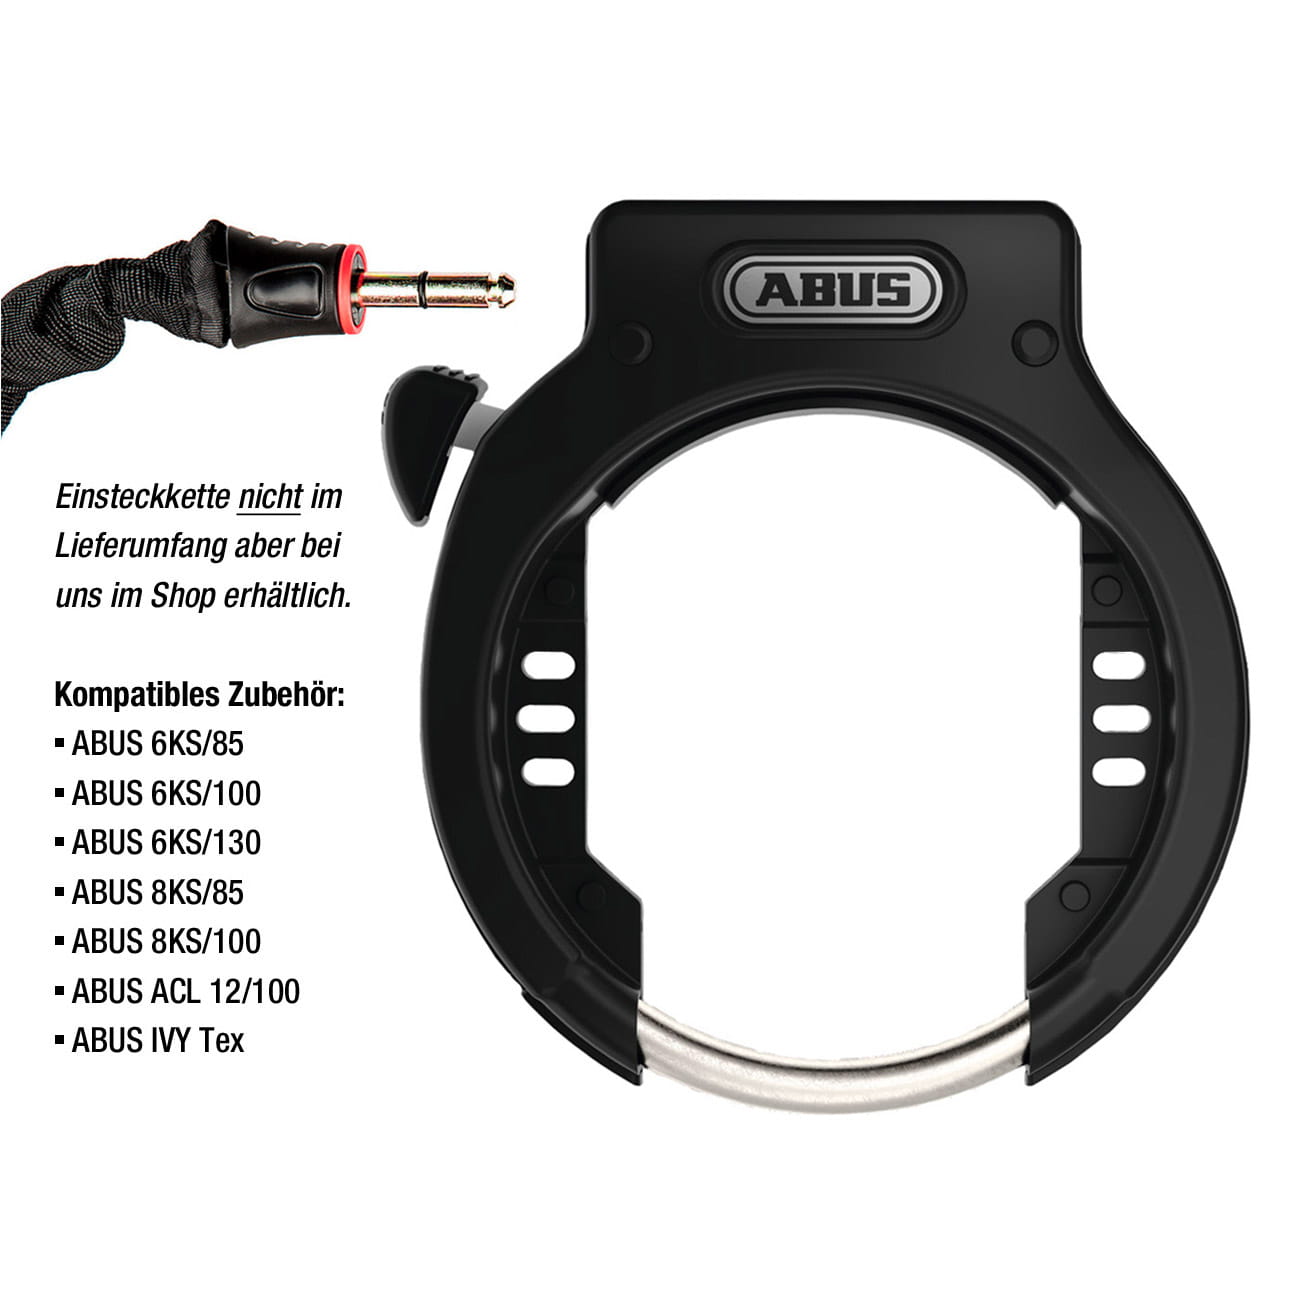 ABUS 4650 XL Amparo Frame Lock Black